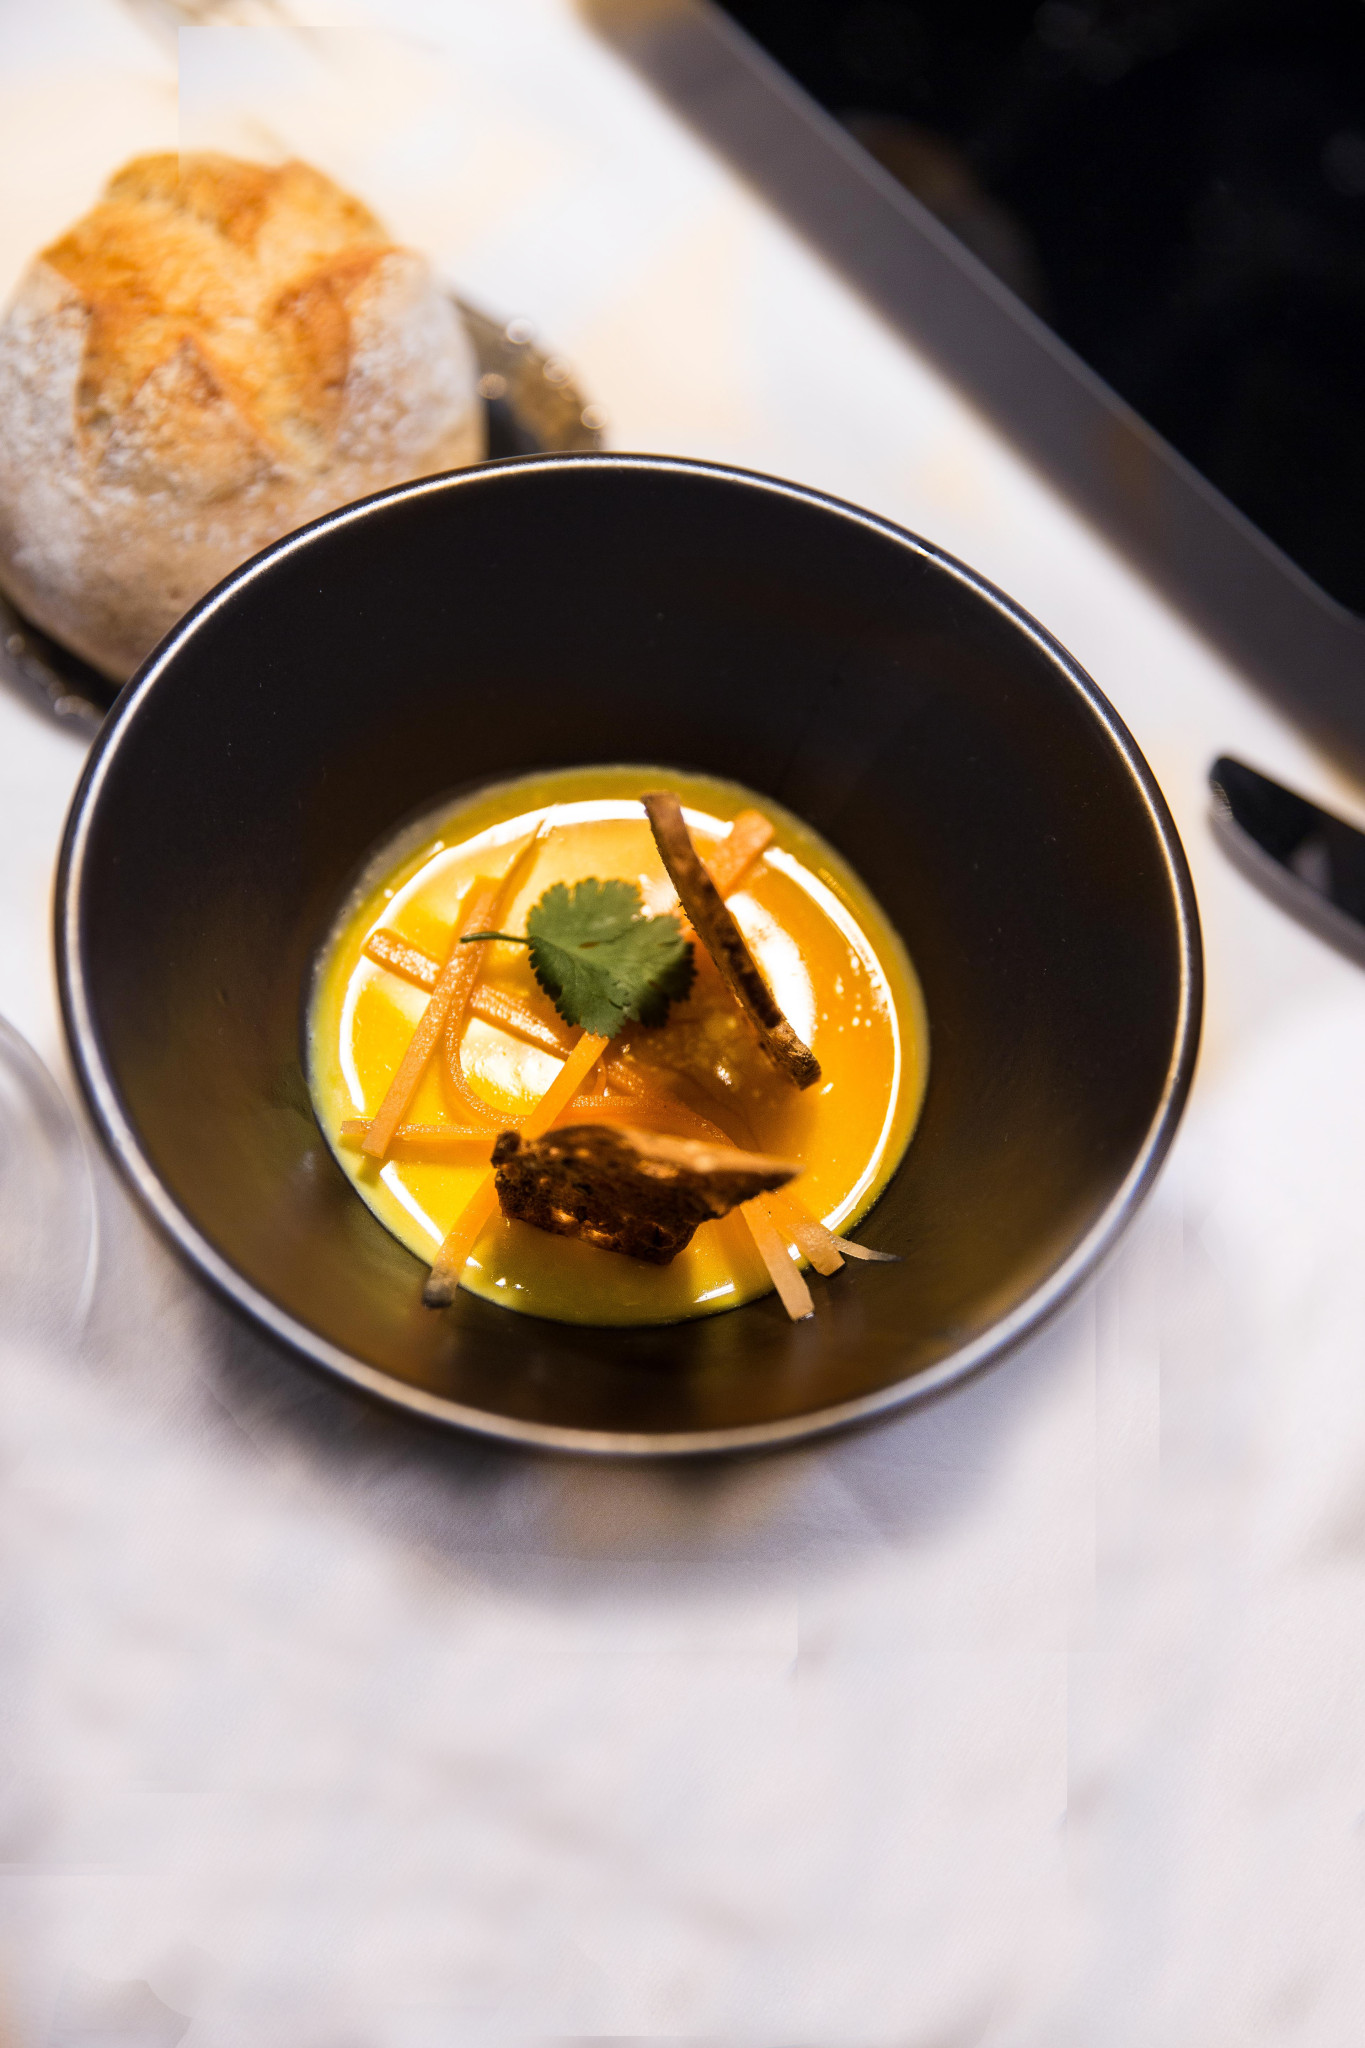 Royale de foie gras, transparence orange safran Jeremy galvan DEF